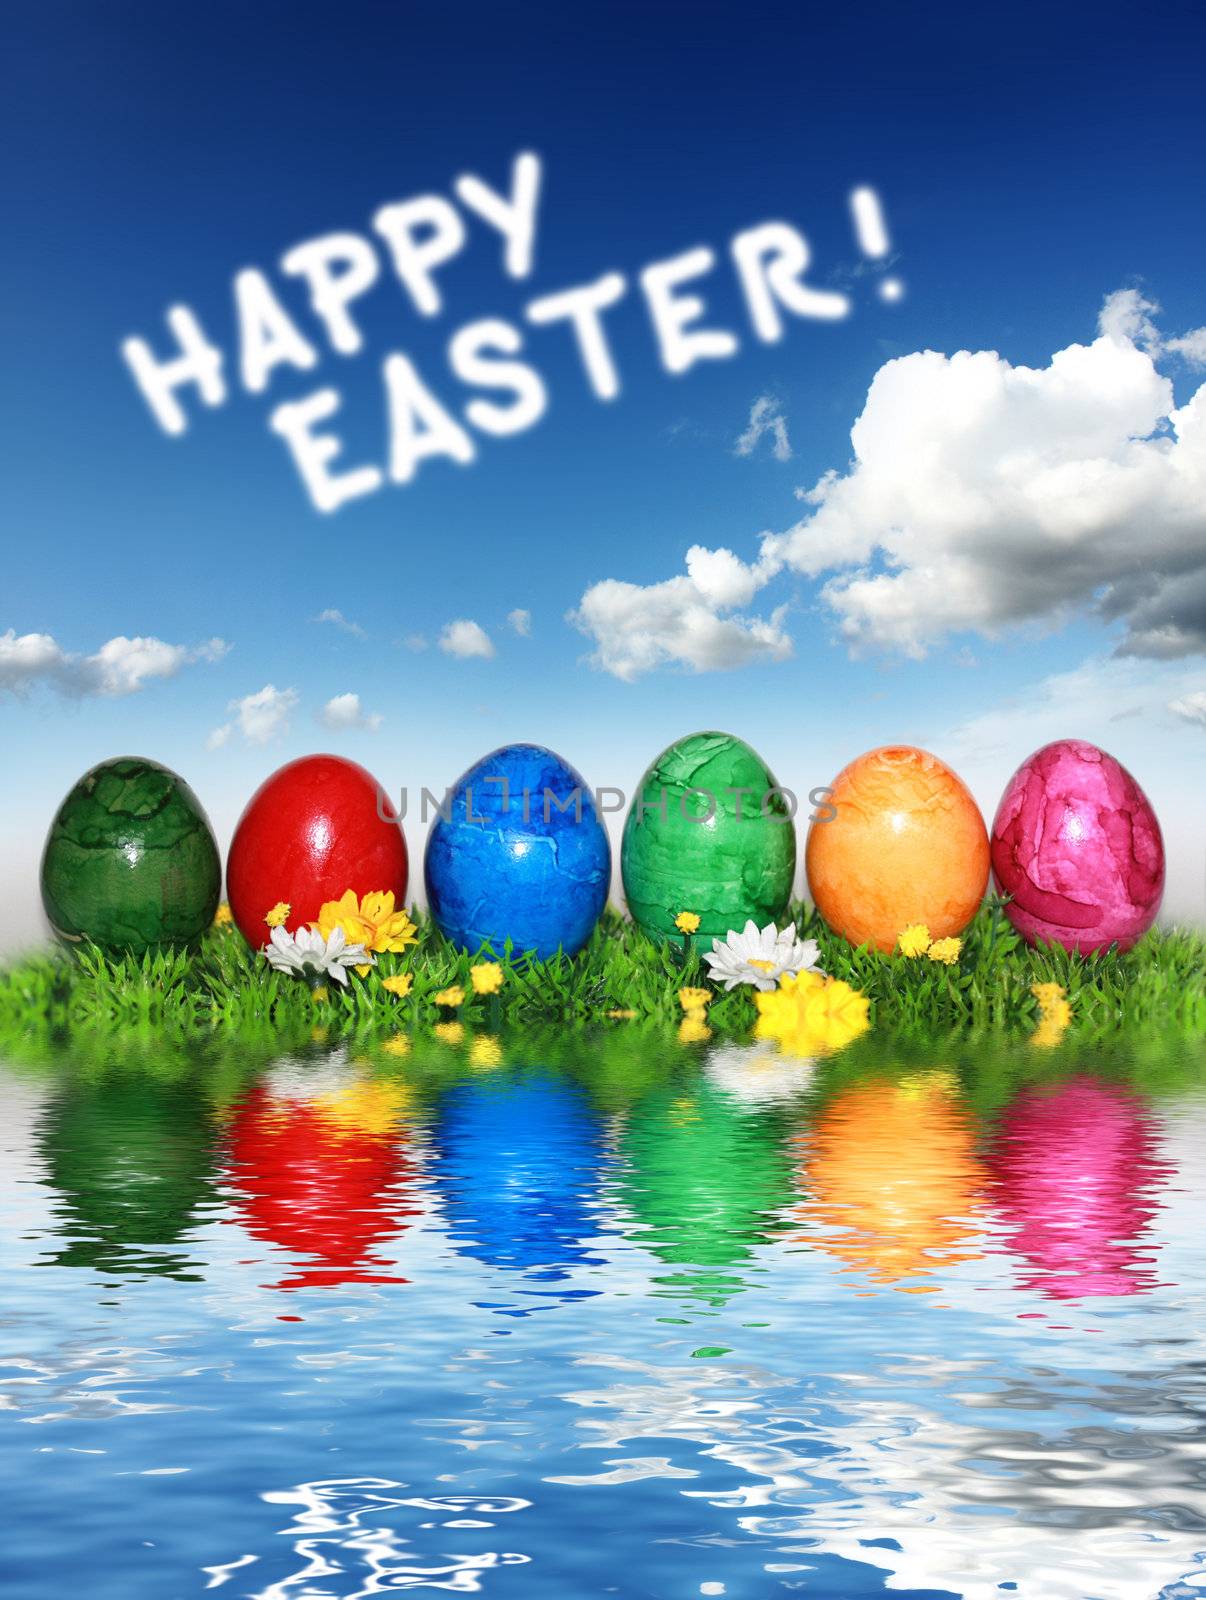 Happy Easter Dekoration by photochecker